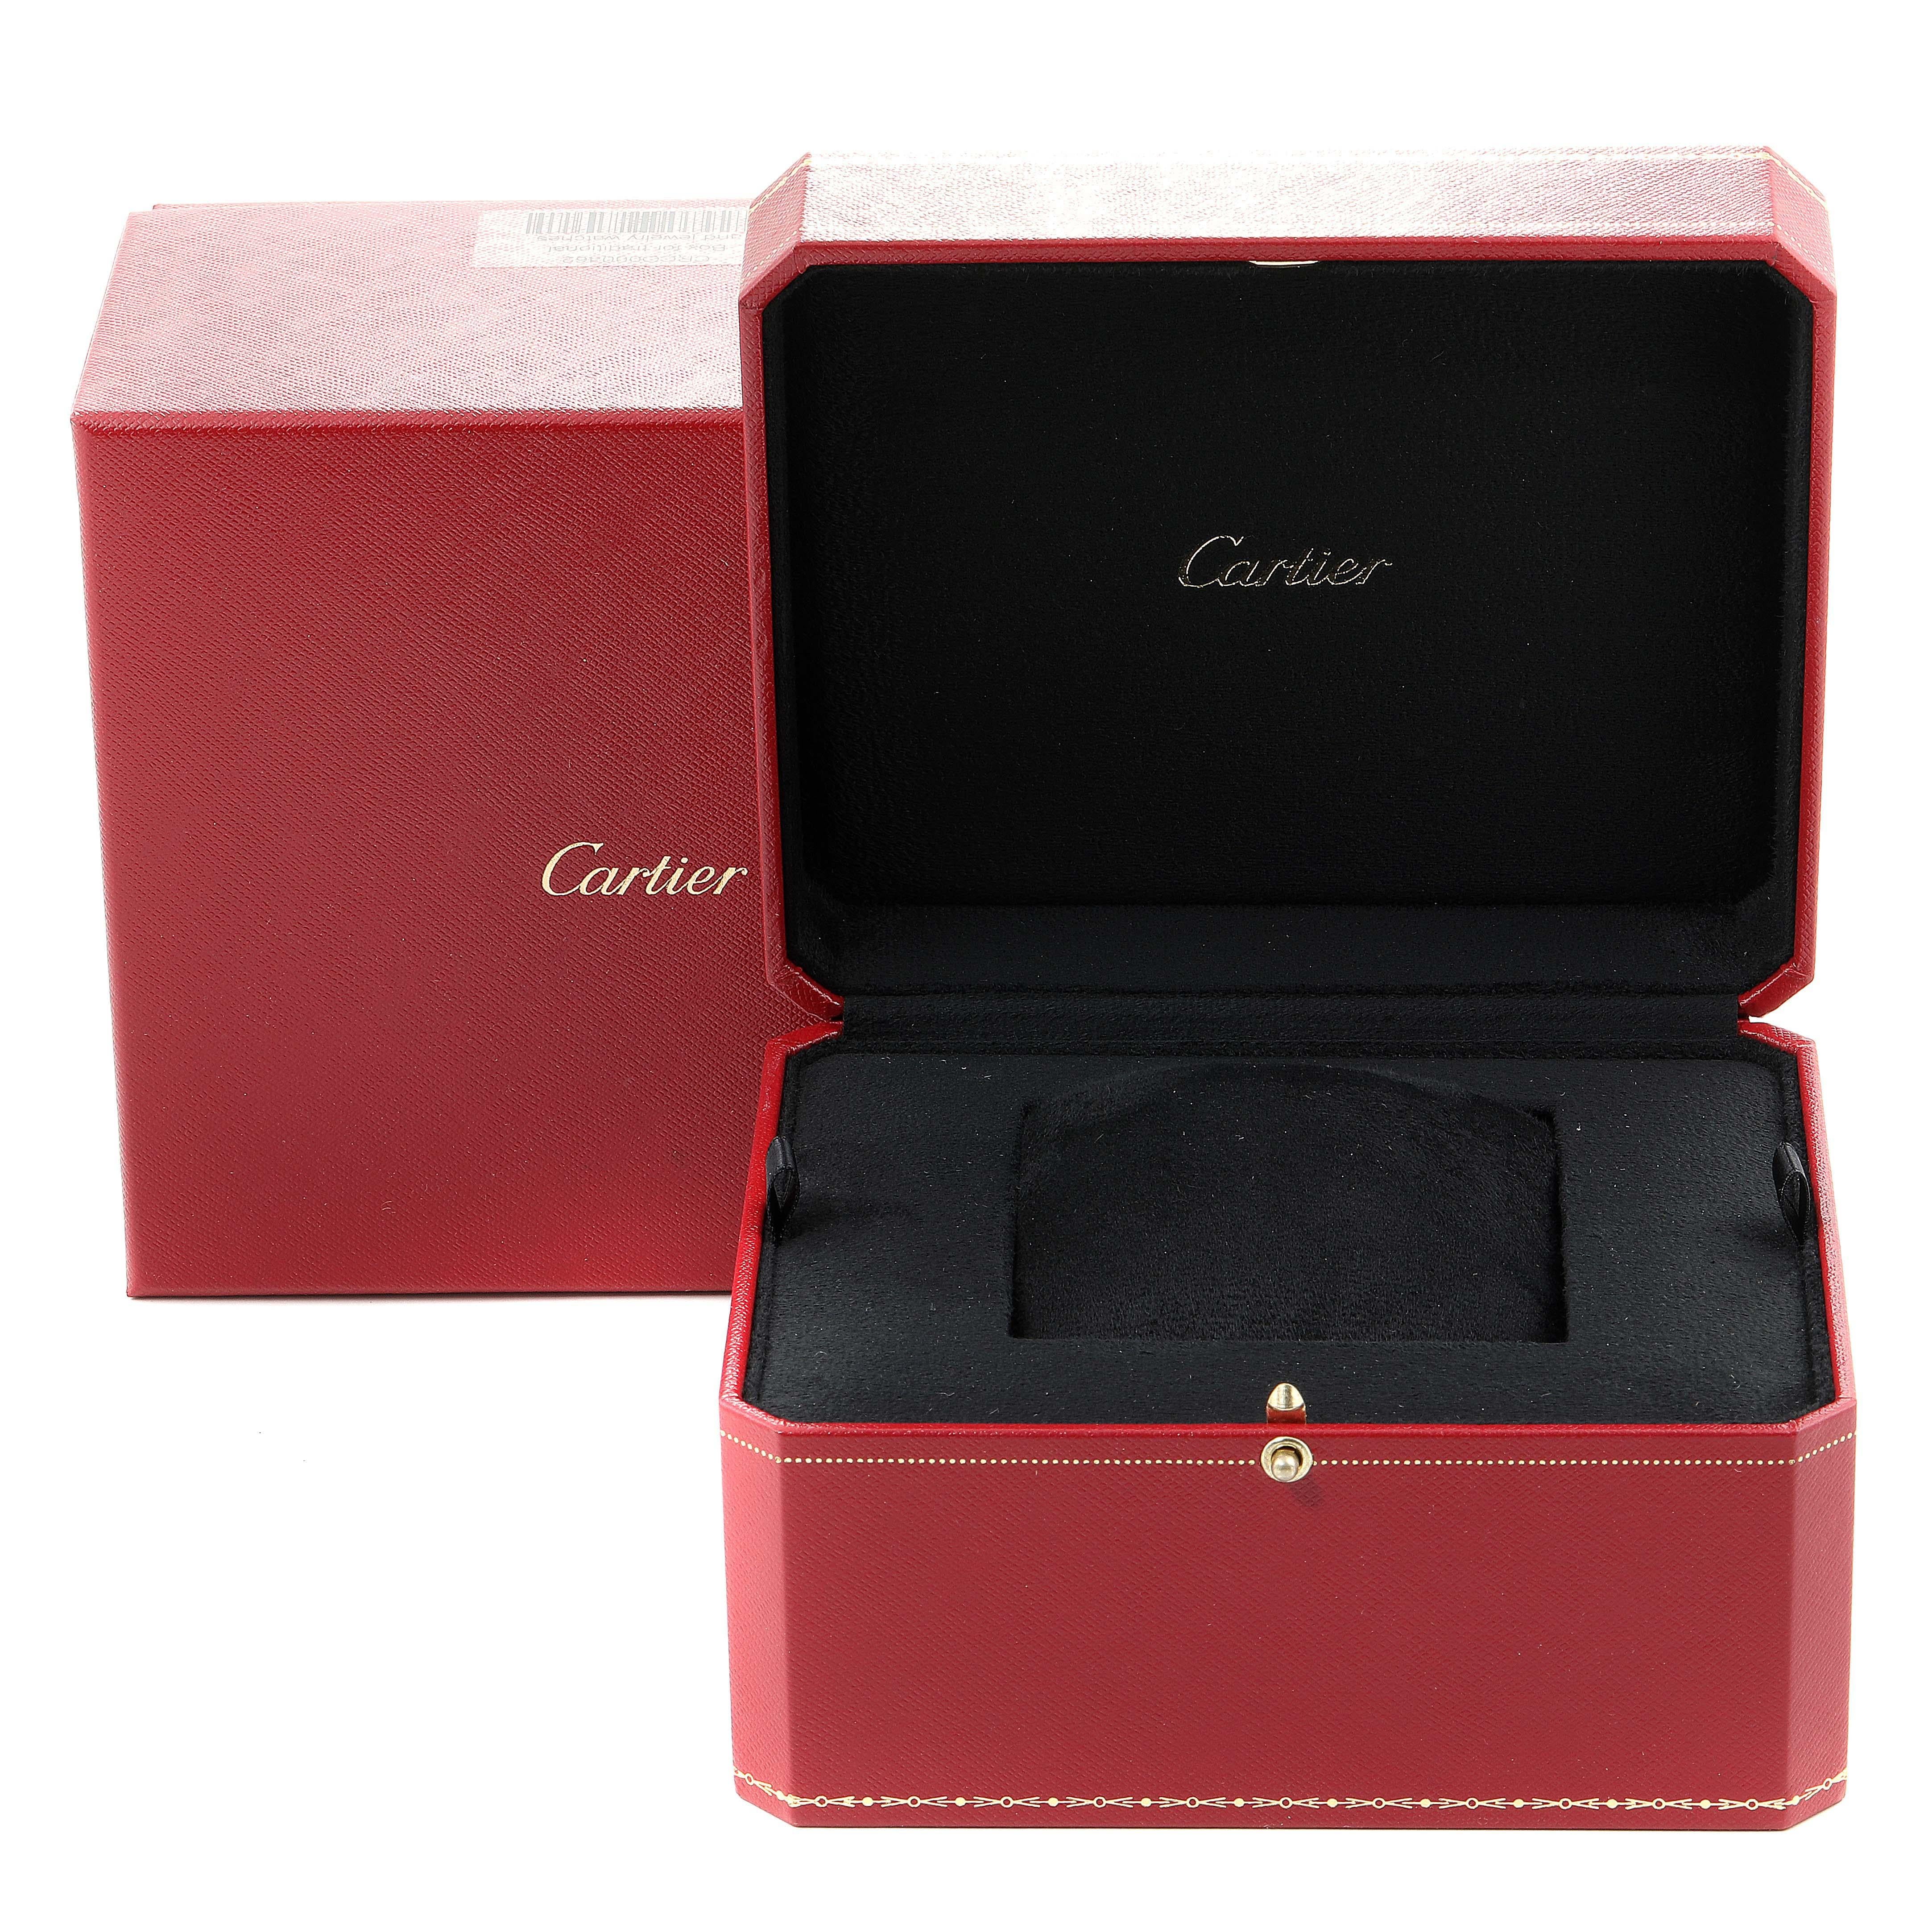 Cartier Pasha Seatimer Chronograph Rubber Strap Watch W31088U2 Box 2